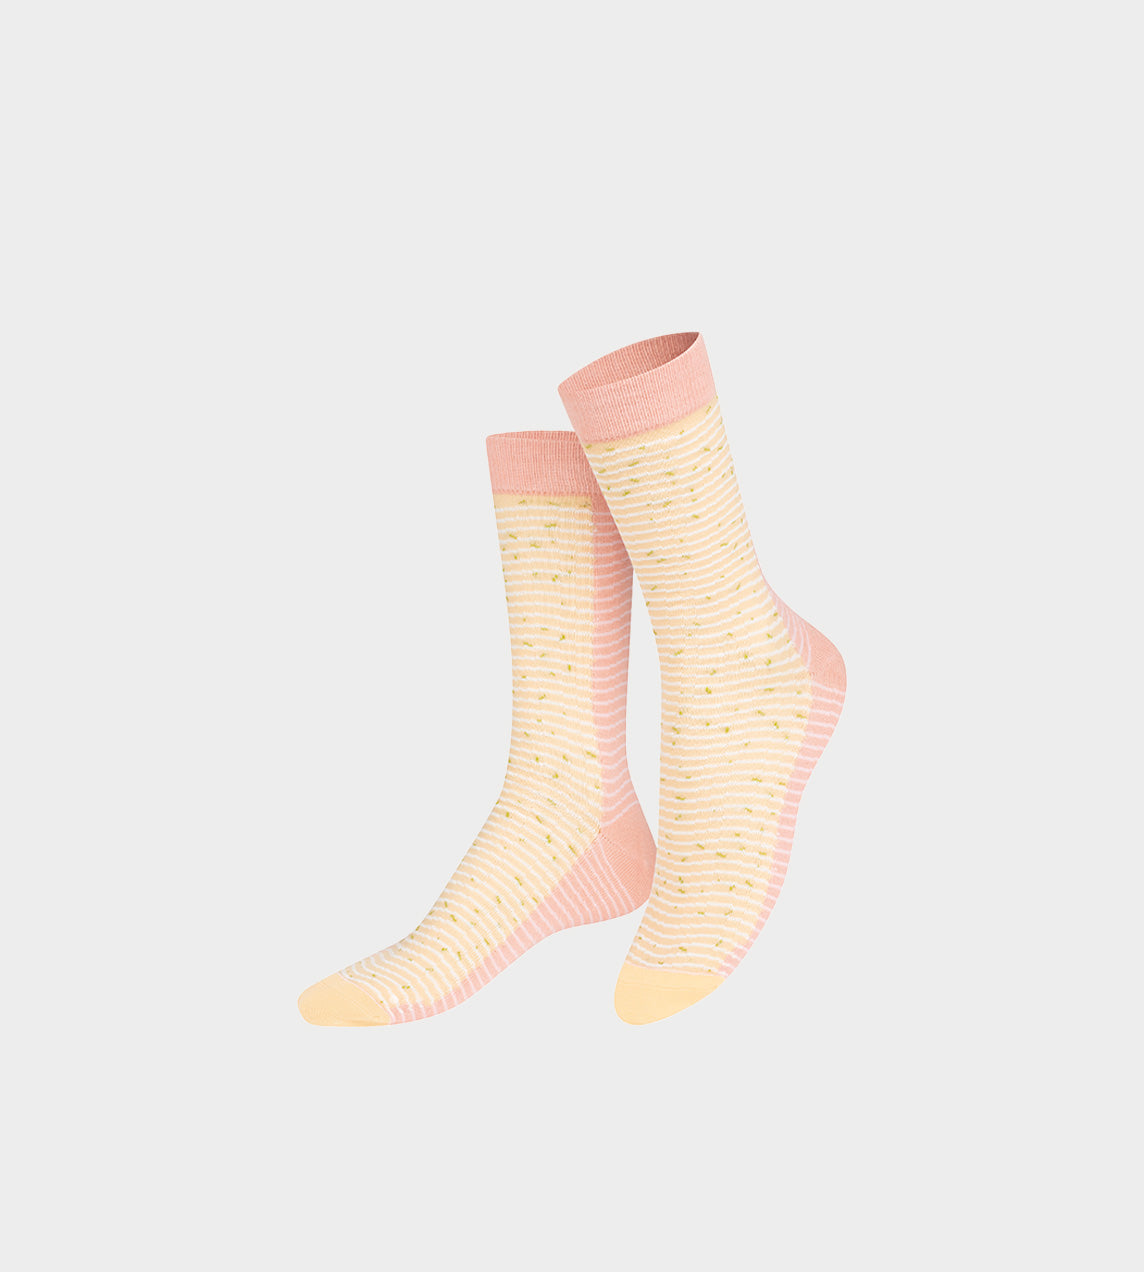 EAT MY SOCKS - Miso Ramen Socks - 2 Pairs